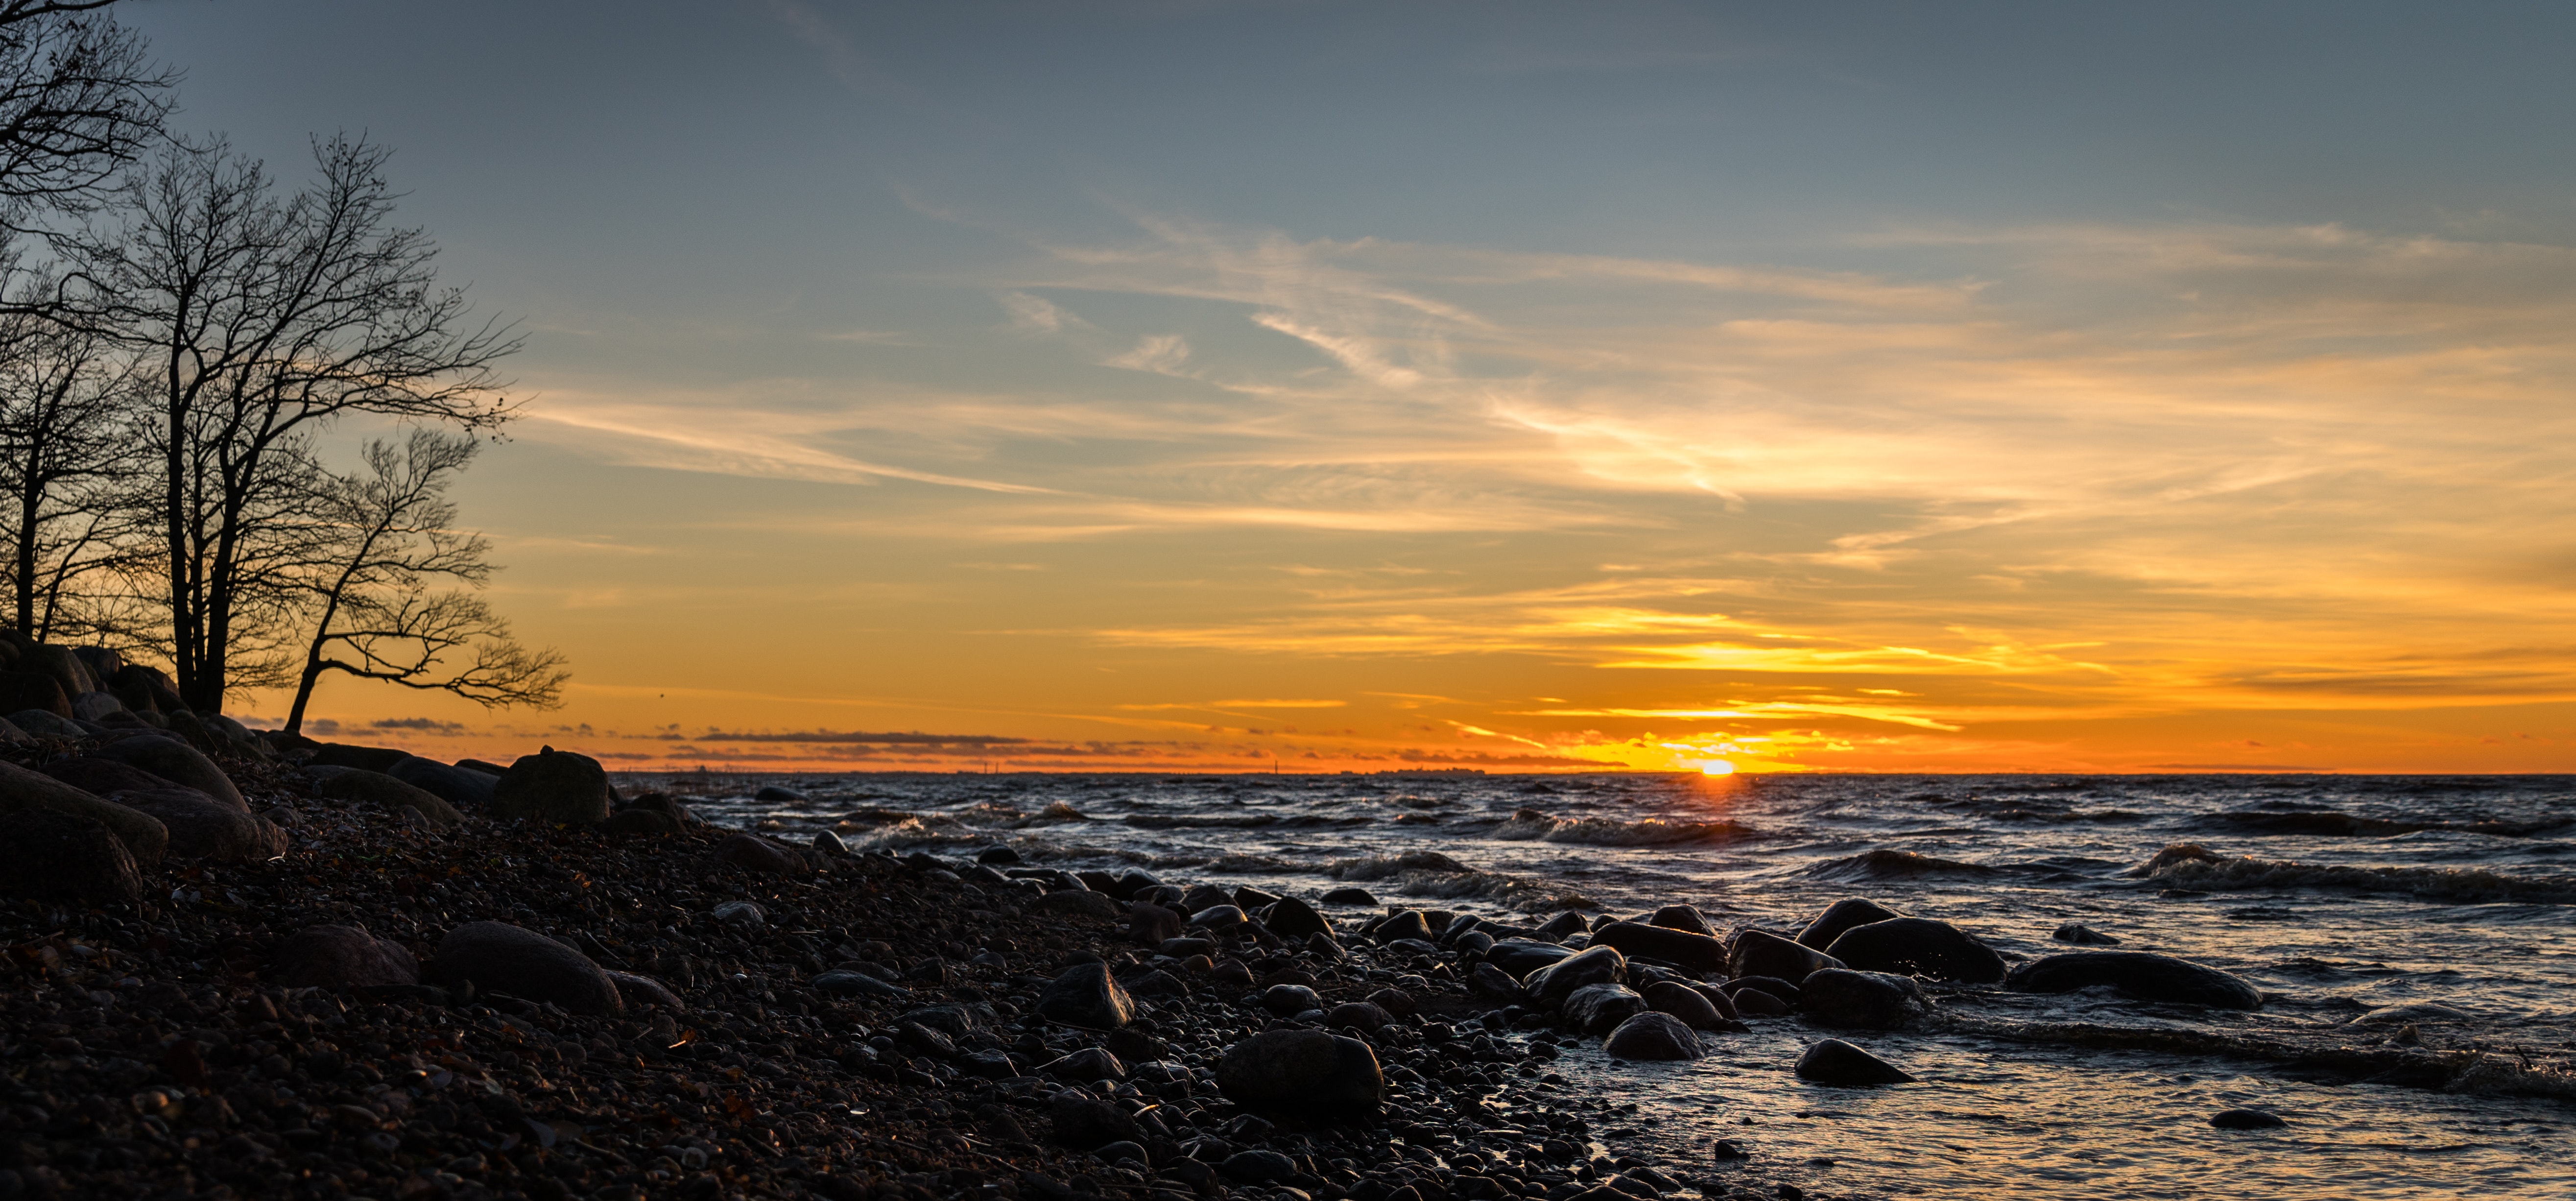 Seashore photo shot during sunset